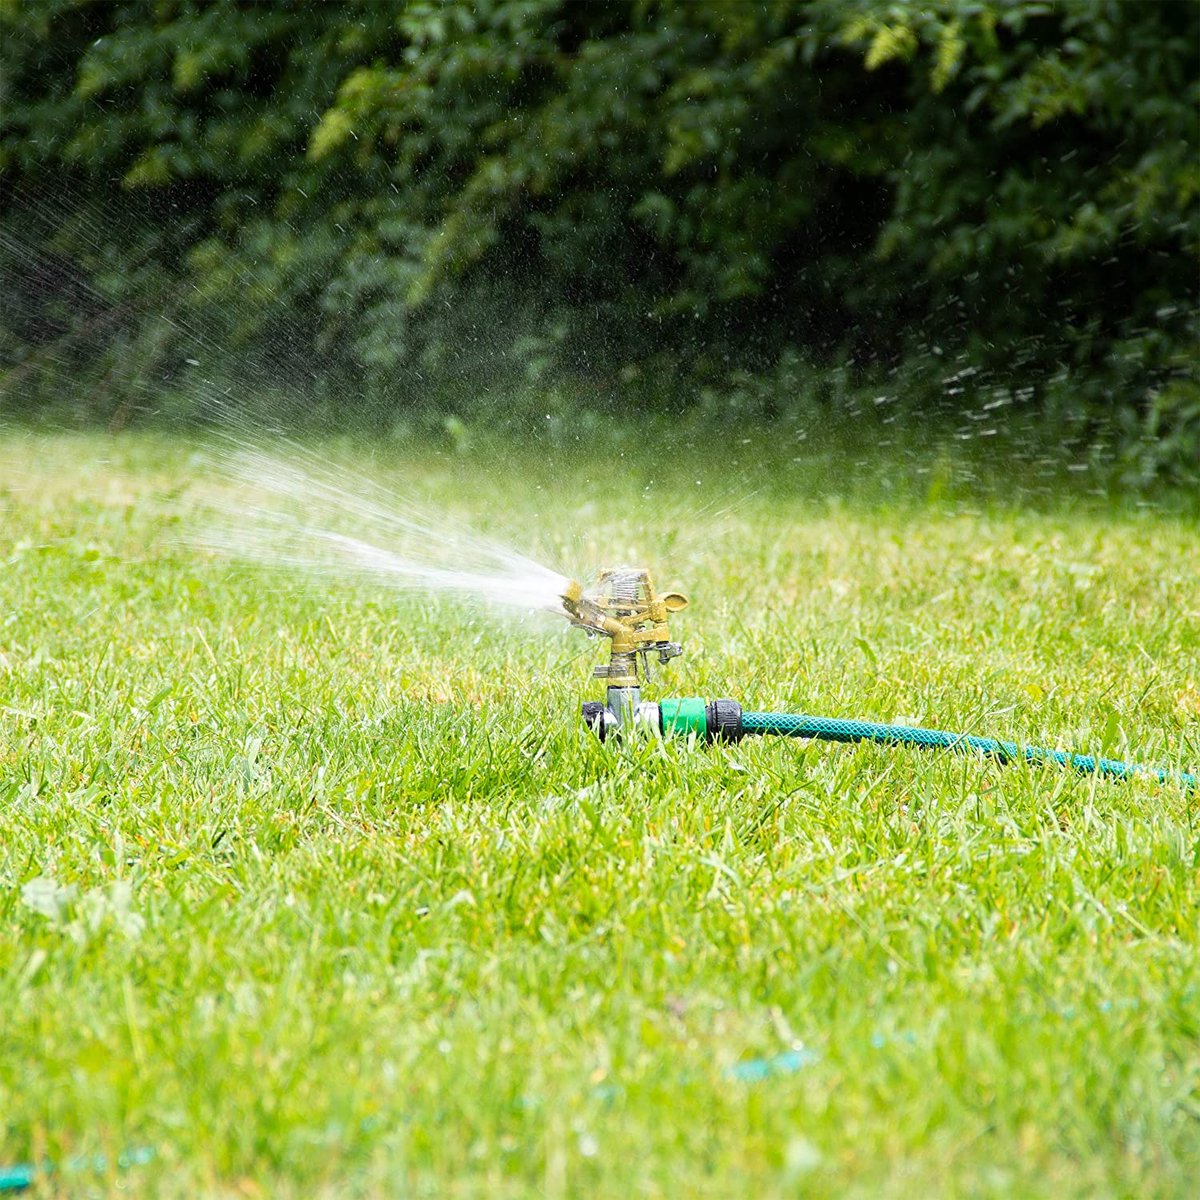 sprinkle - Gazonsproeier zomer, Gardena Aqua - sprinkler gazonsproeier